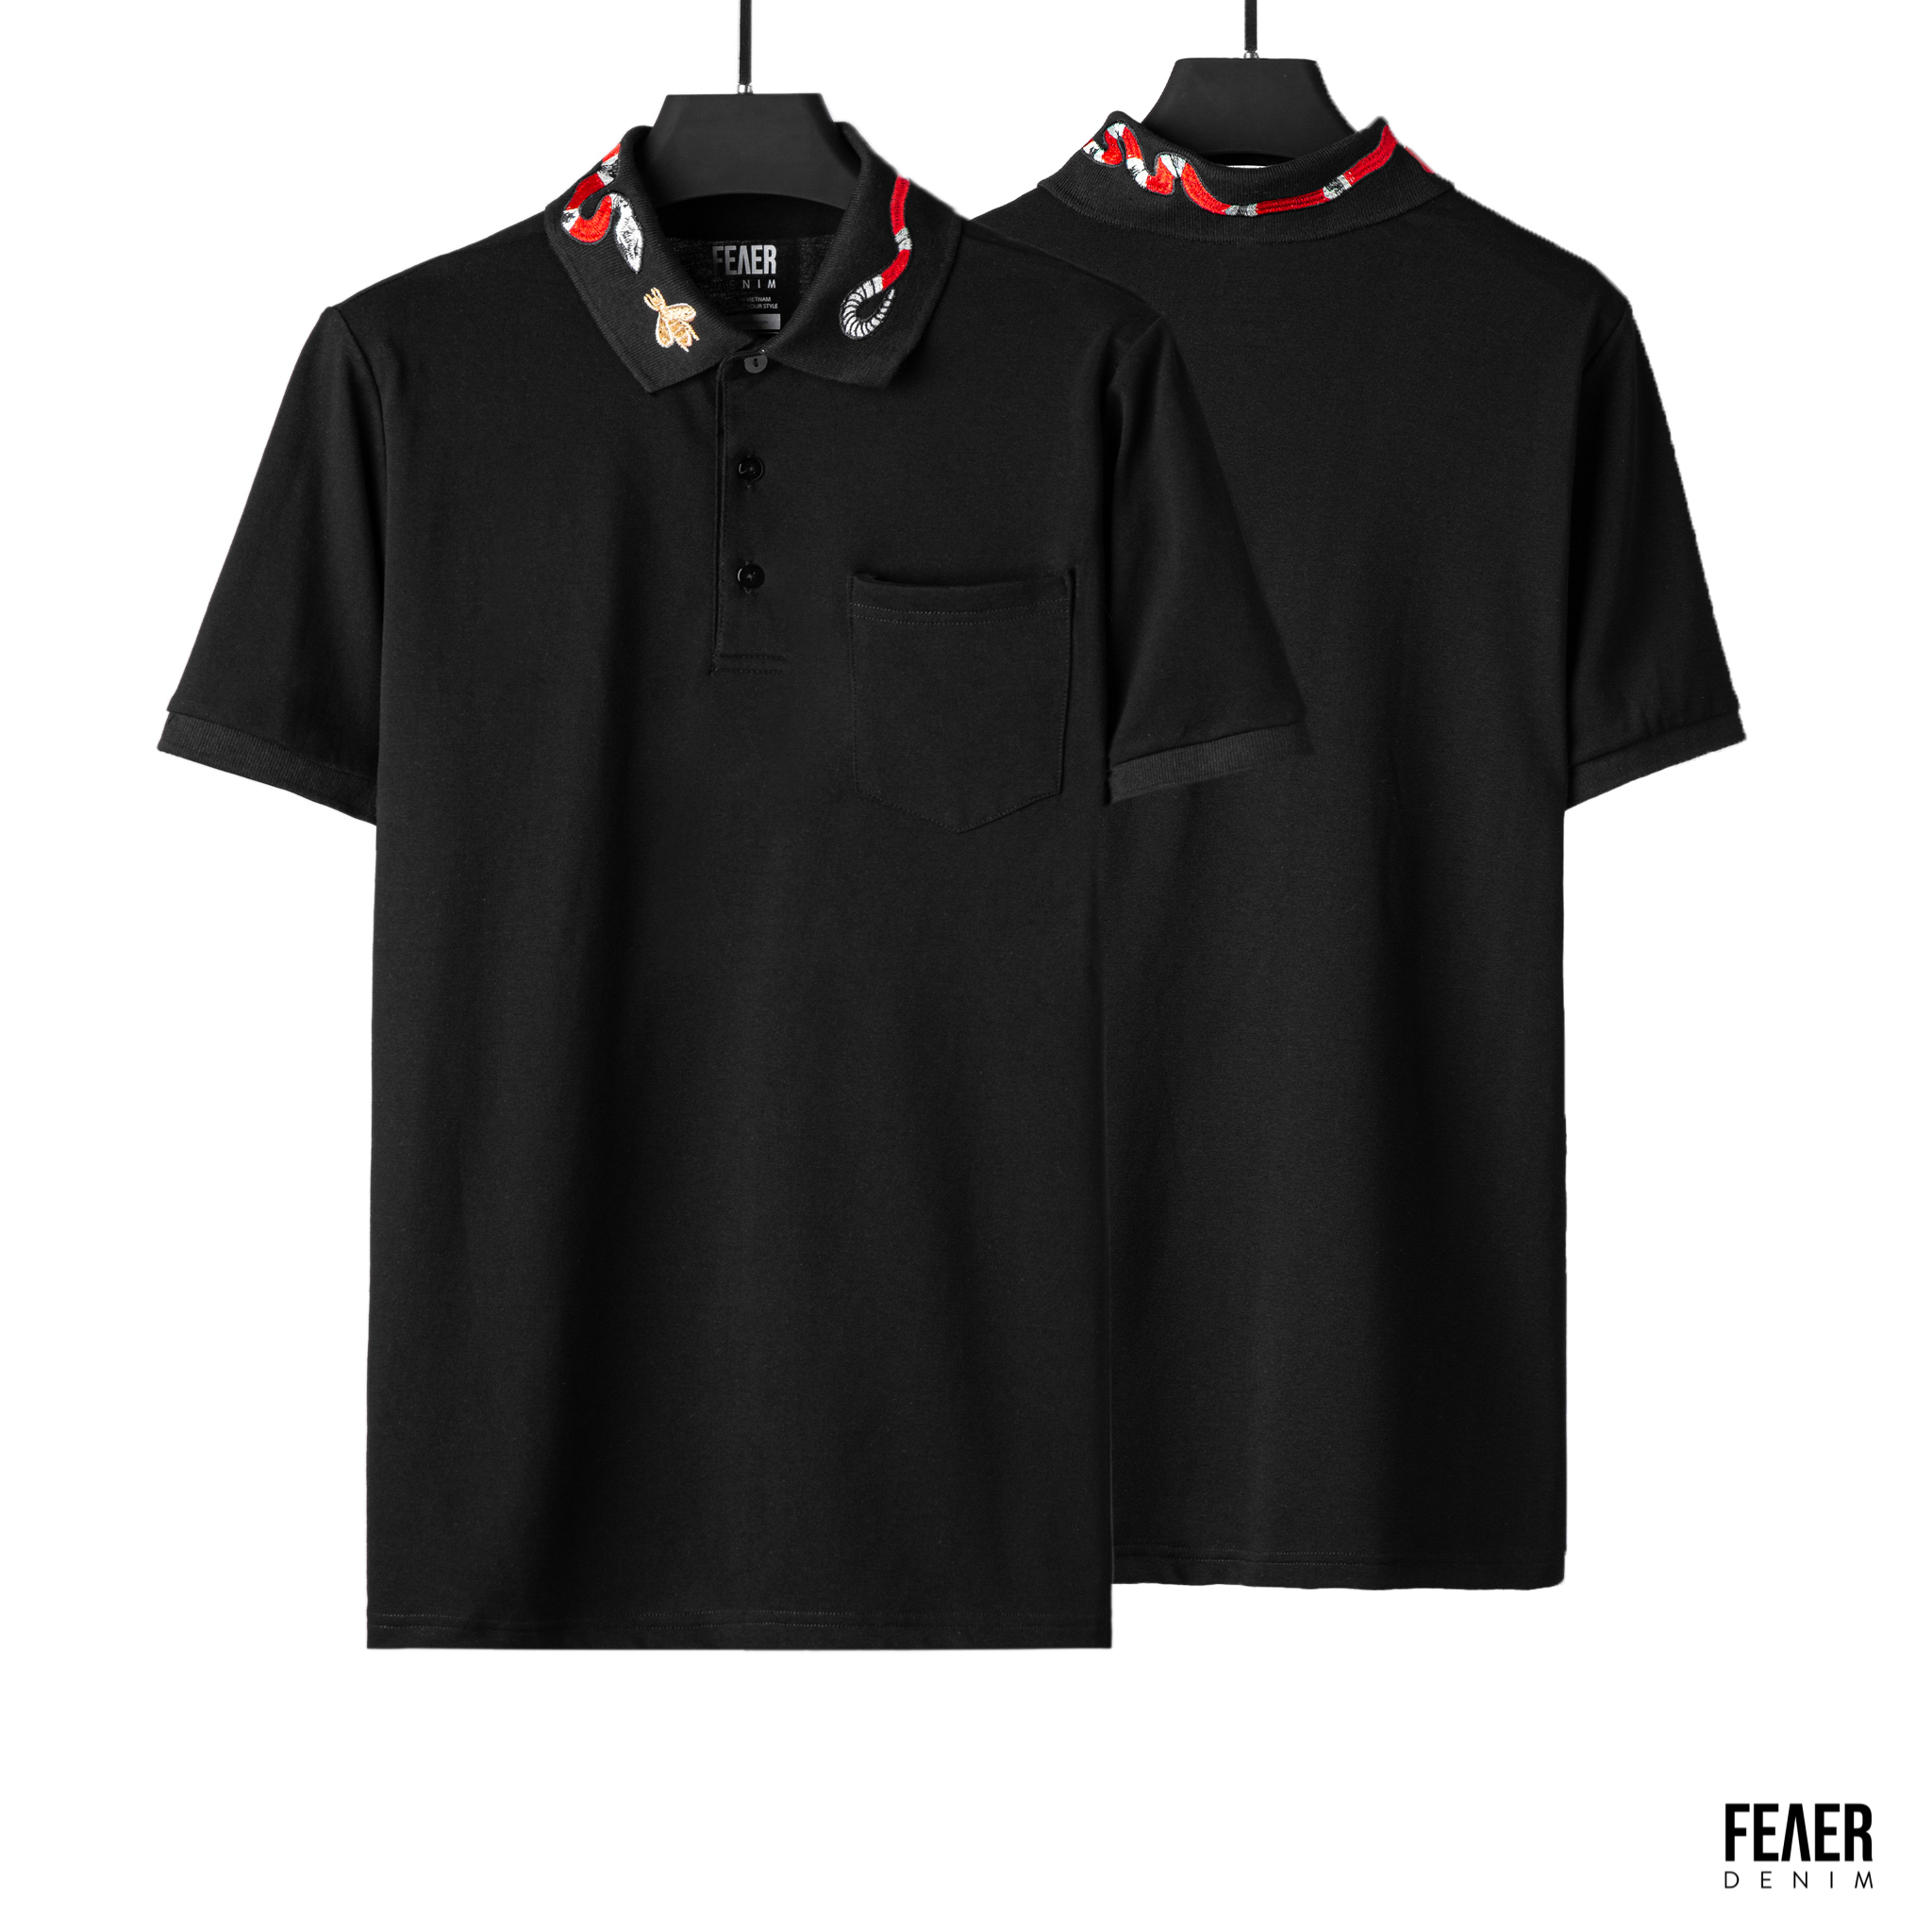 Áo Polo Nam Embroidered Collar FEAER DENIM Form chuẩn, Chất Cotton 100%, Họa Tiết Trẻ Trung